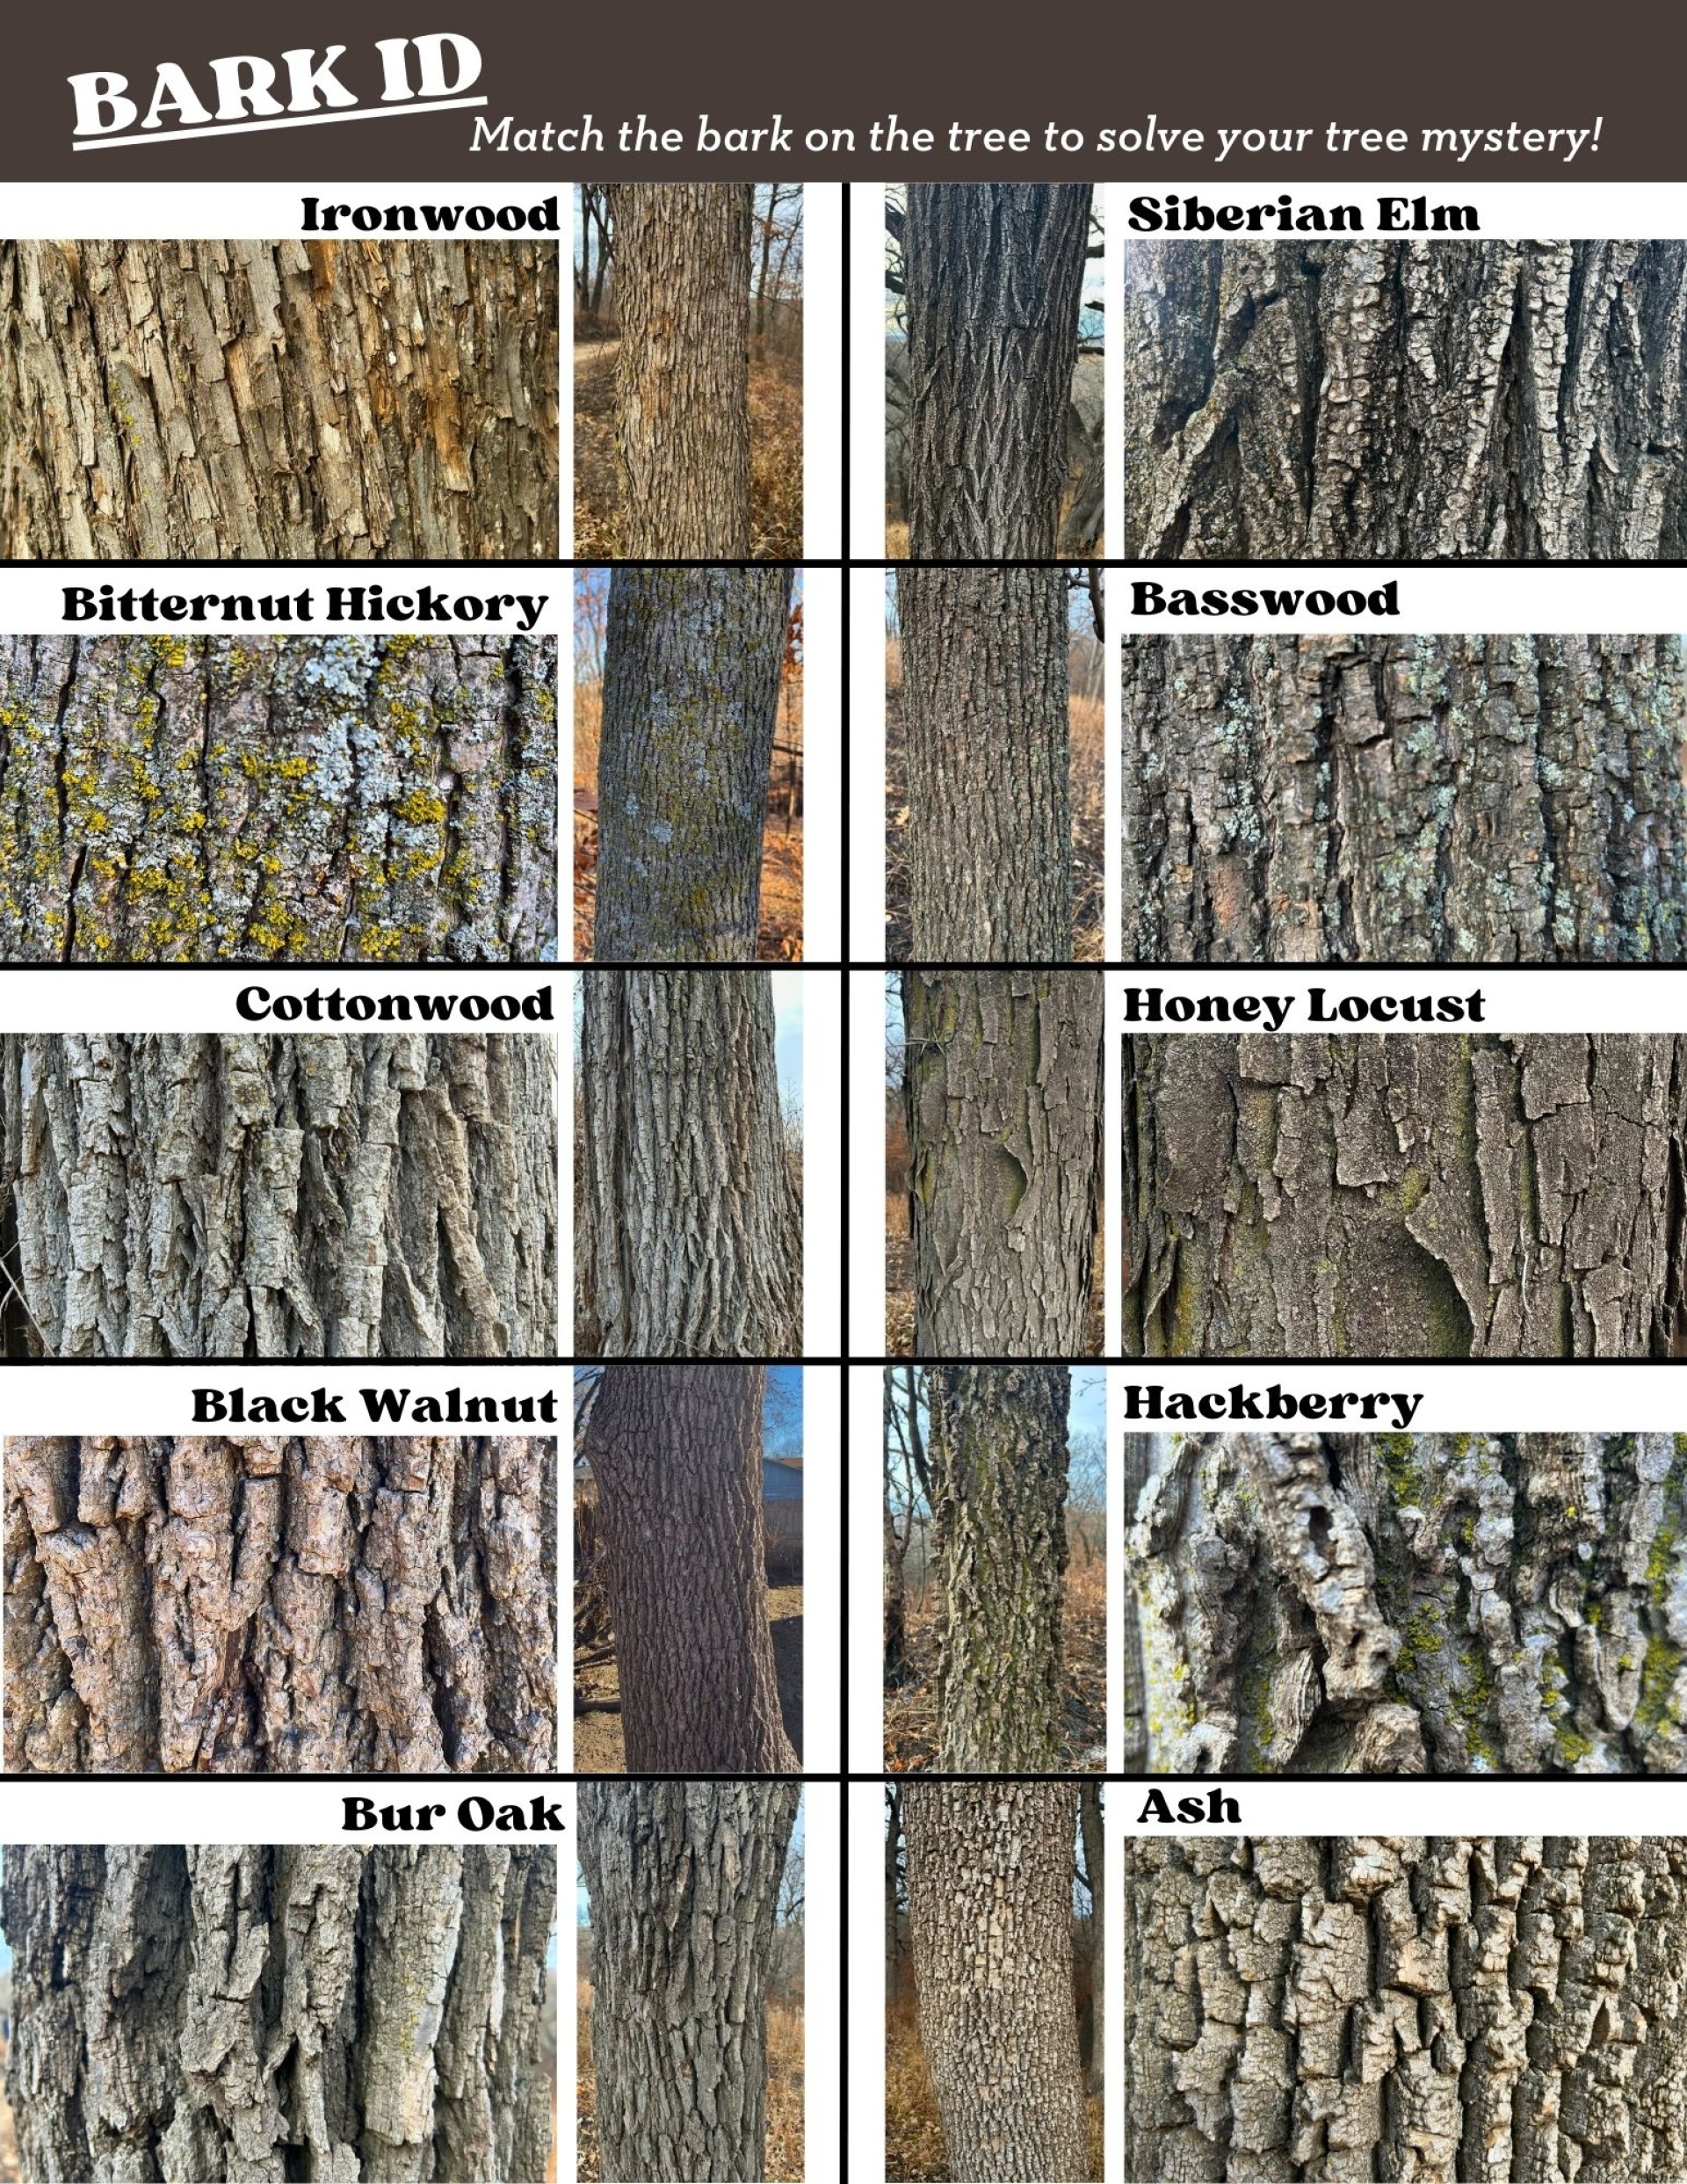 Tree bark id guide